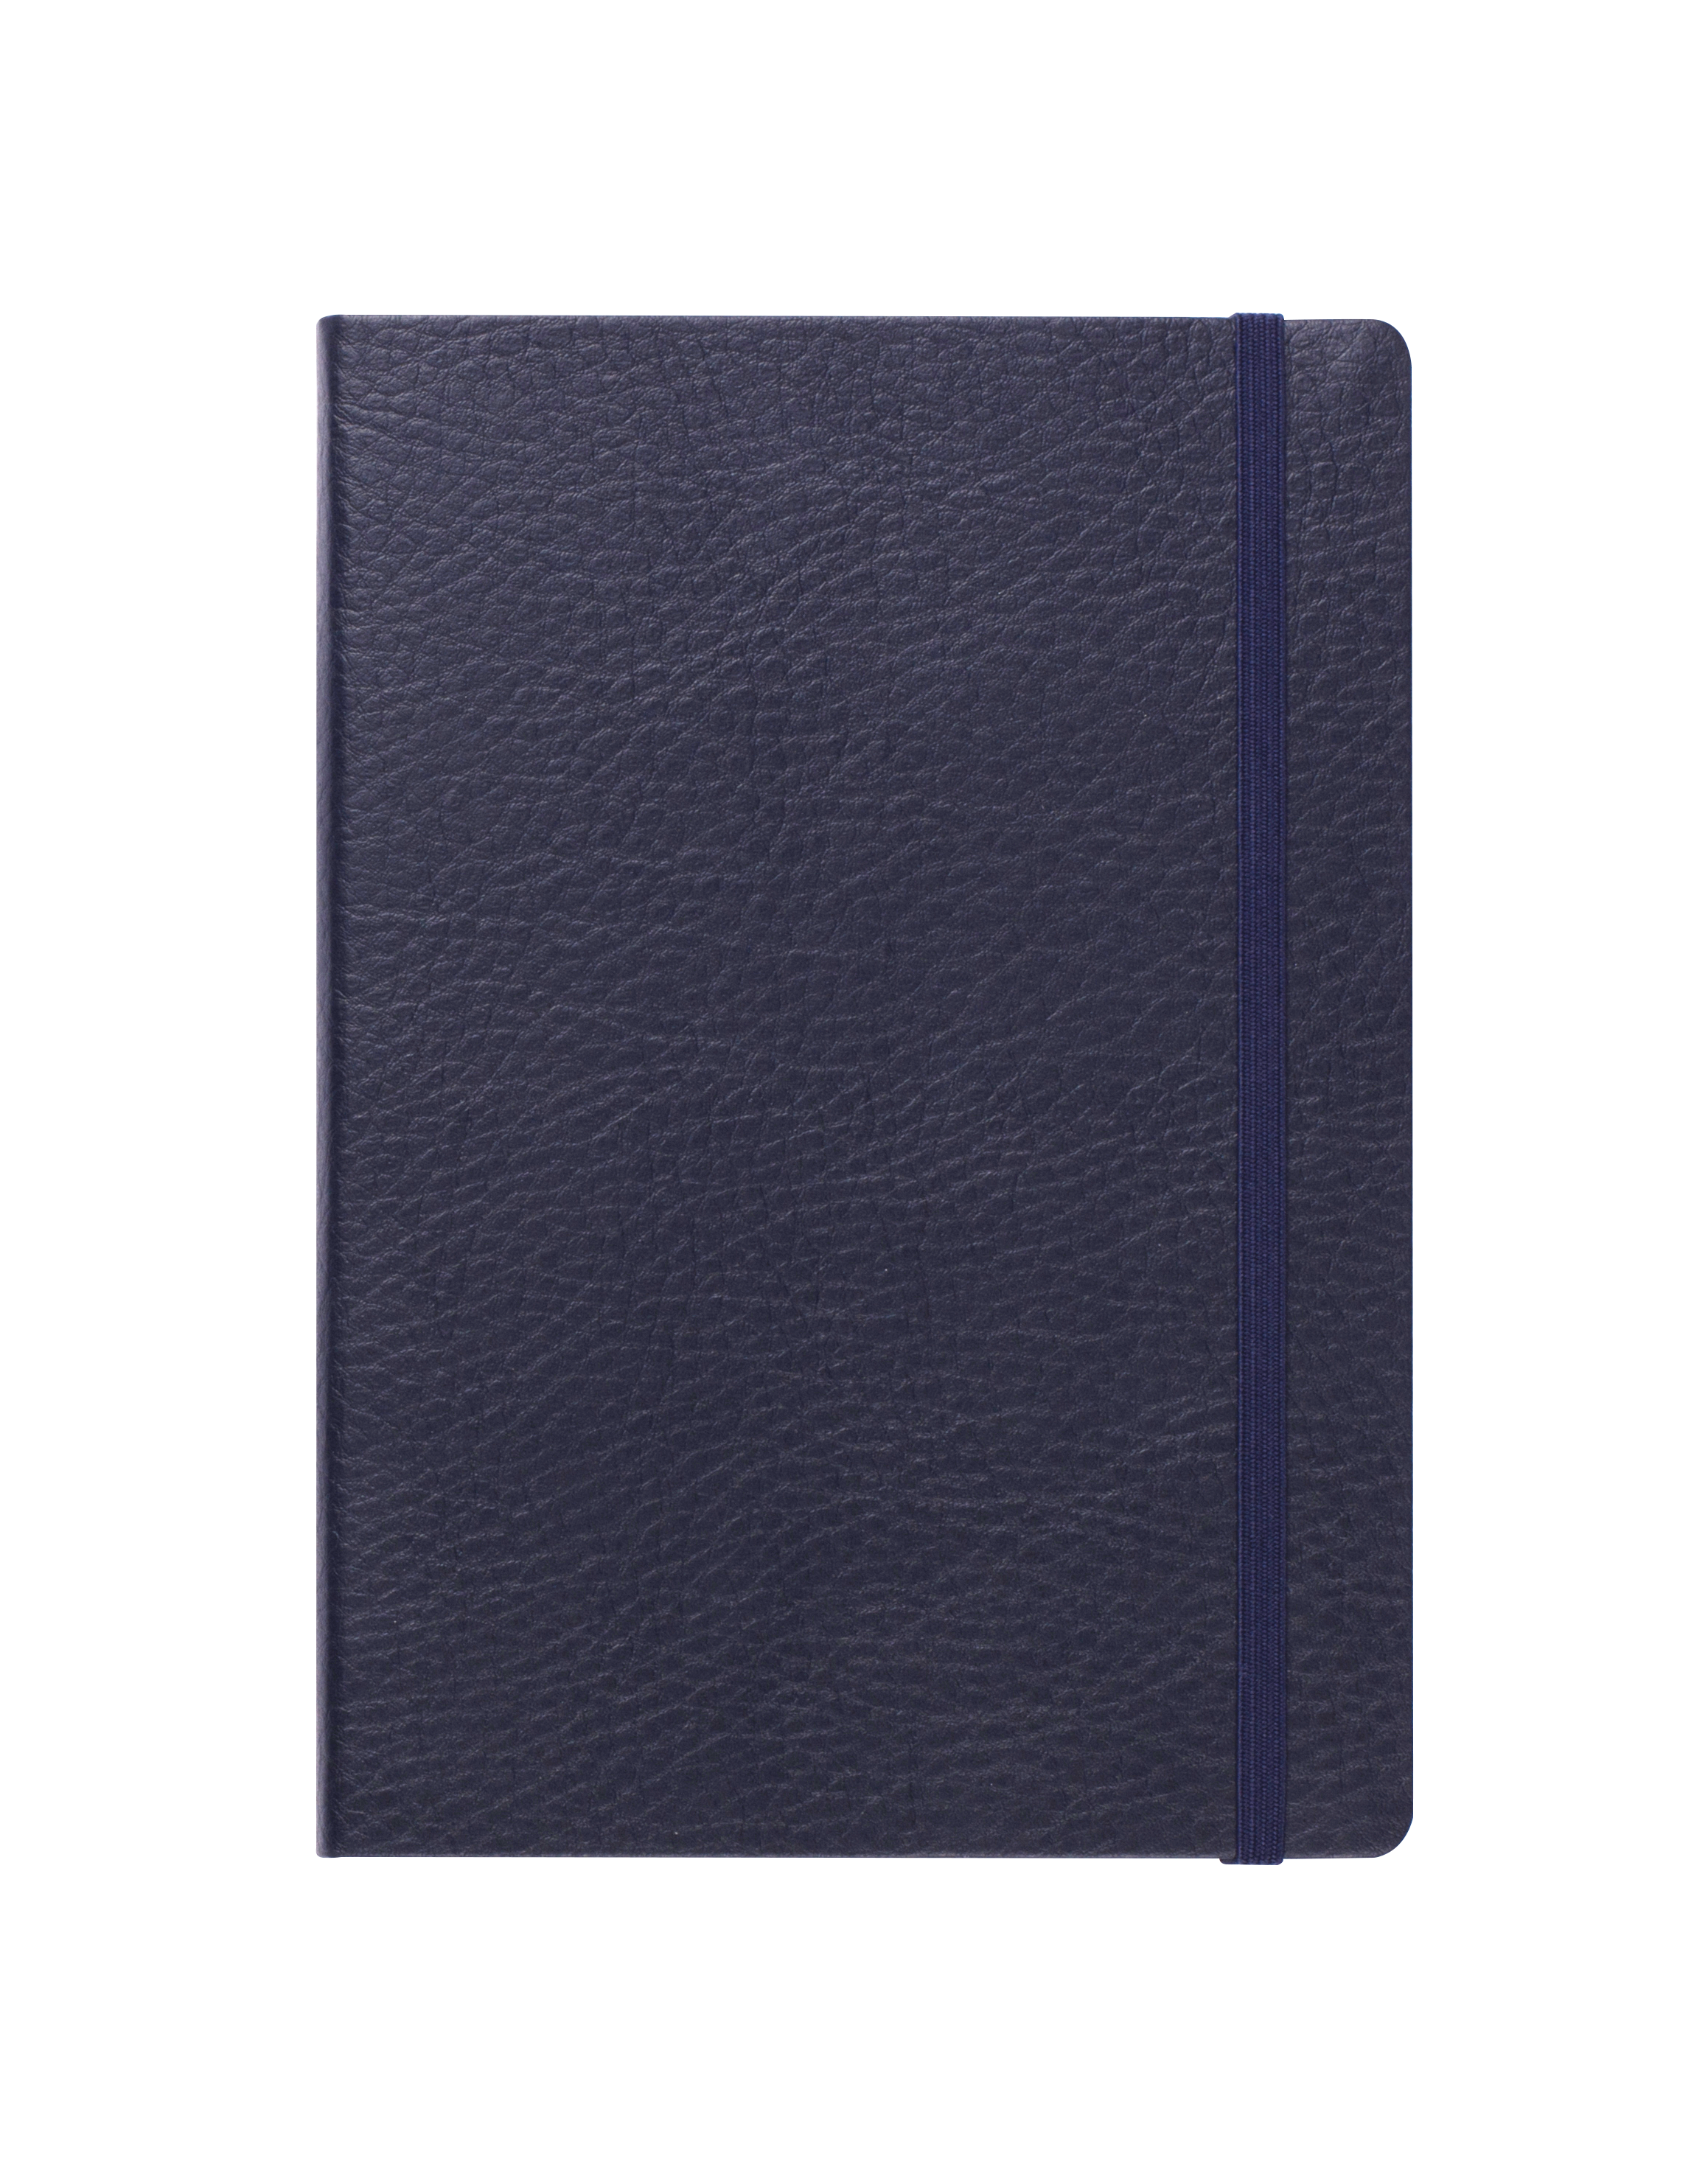 Metropolitan Glasgow B6 Notebook Ruled - Collins Debden